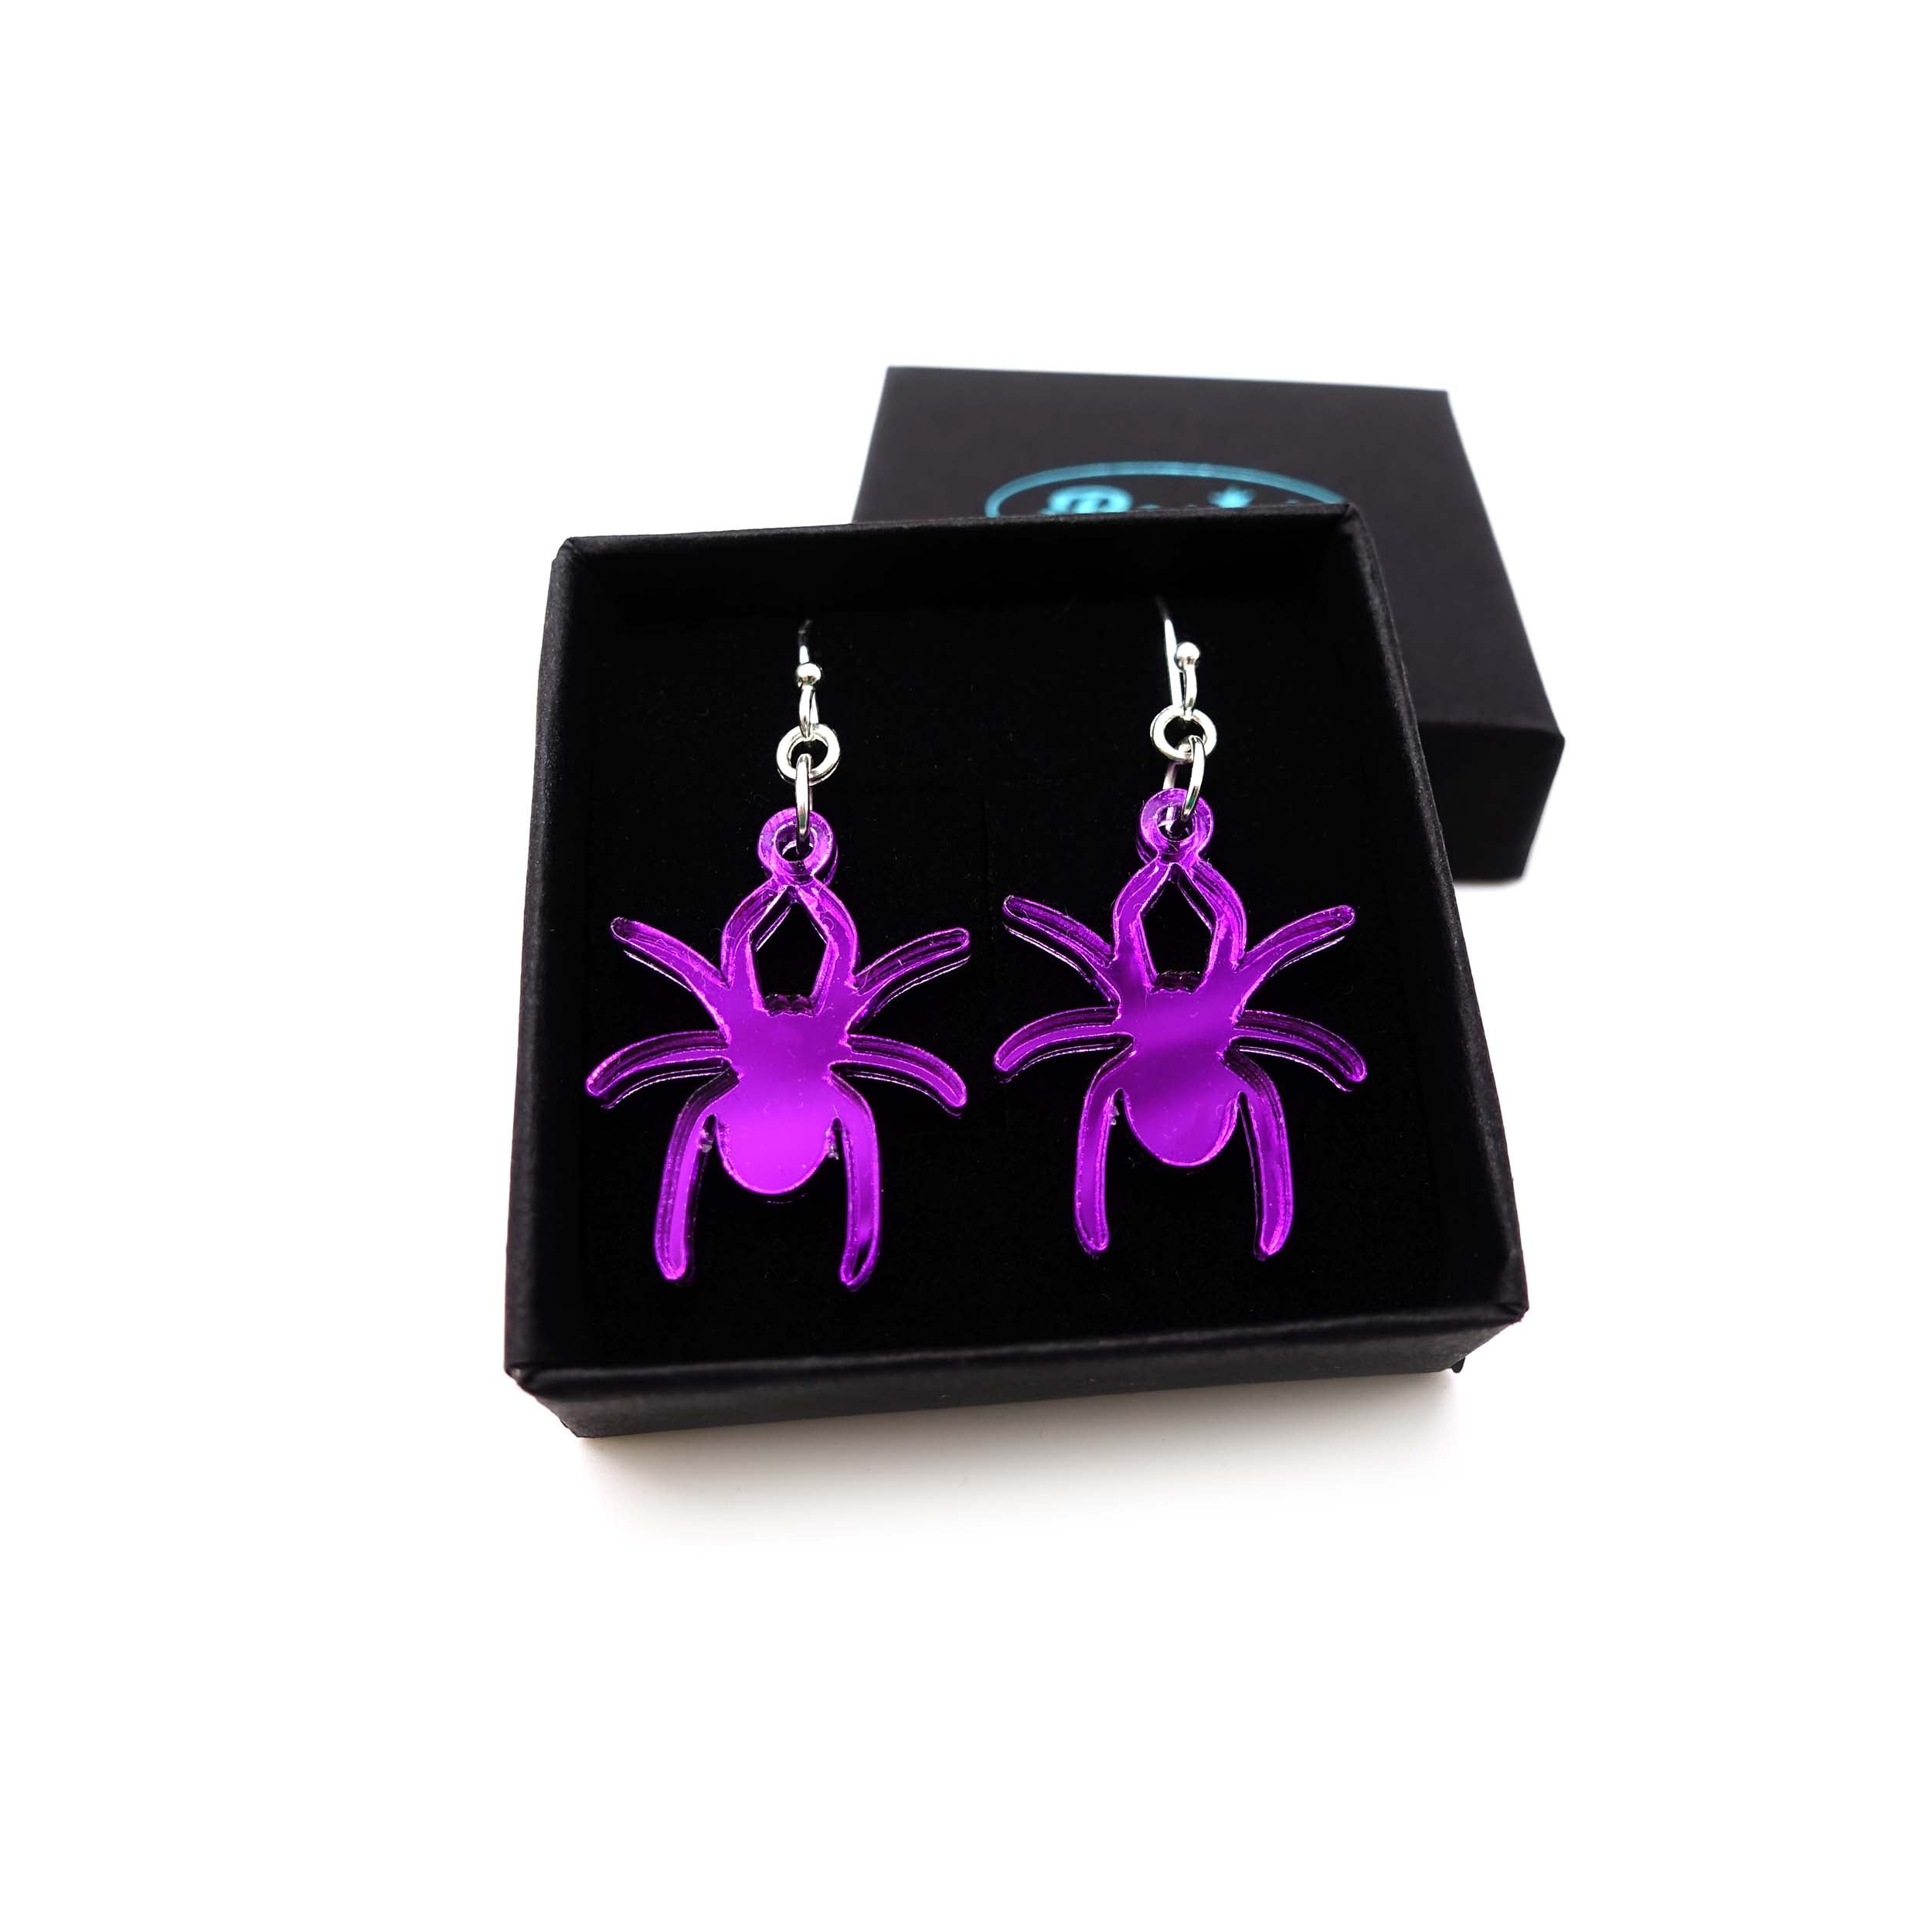 Lady Hale commemorative spider earrings in poison purple shown in box.